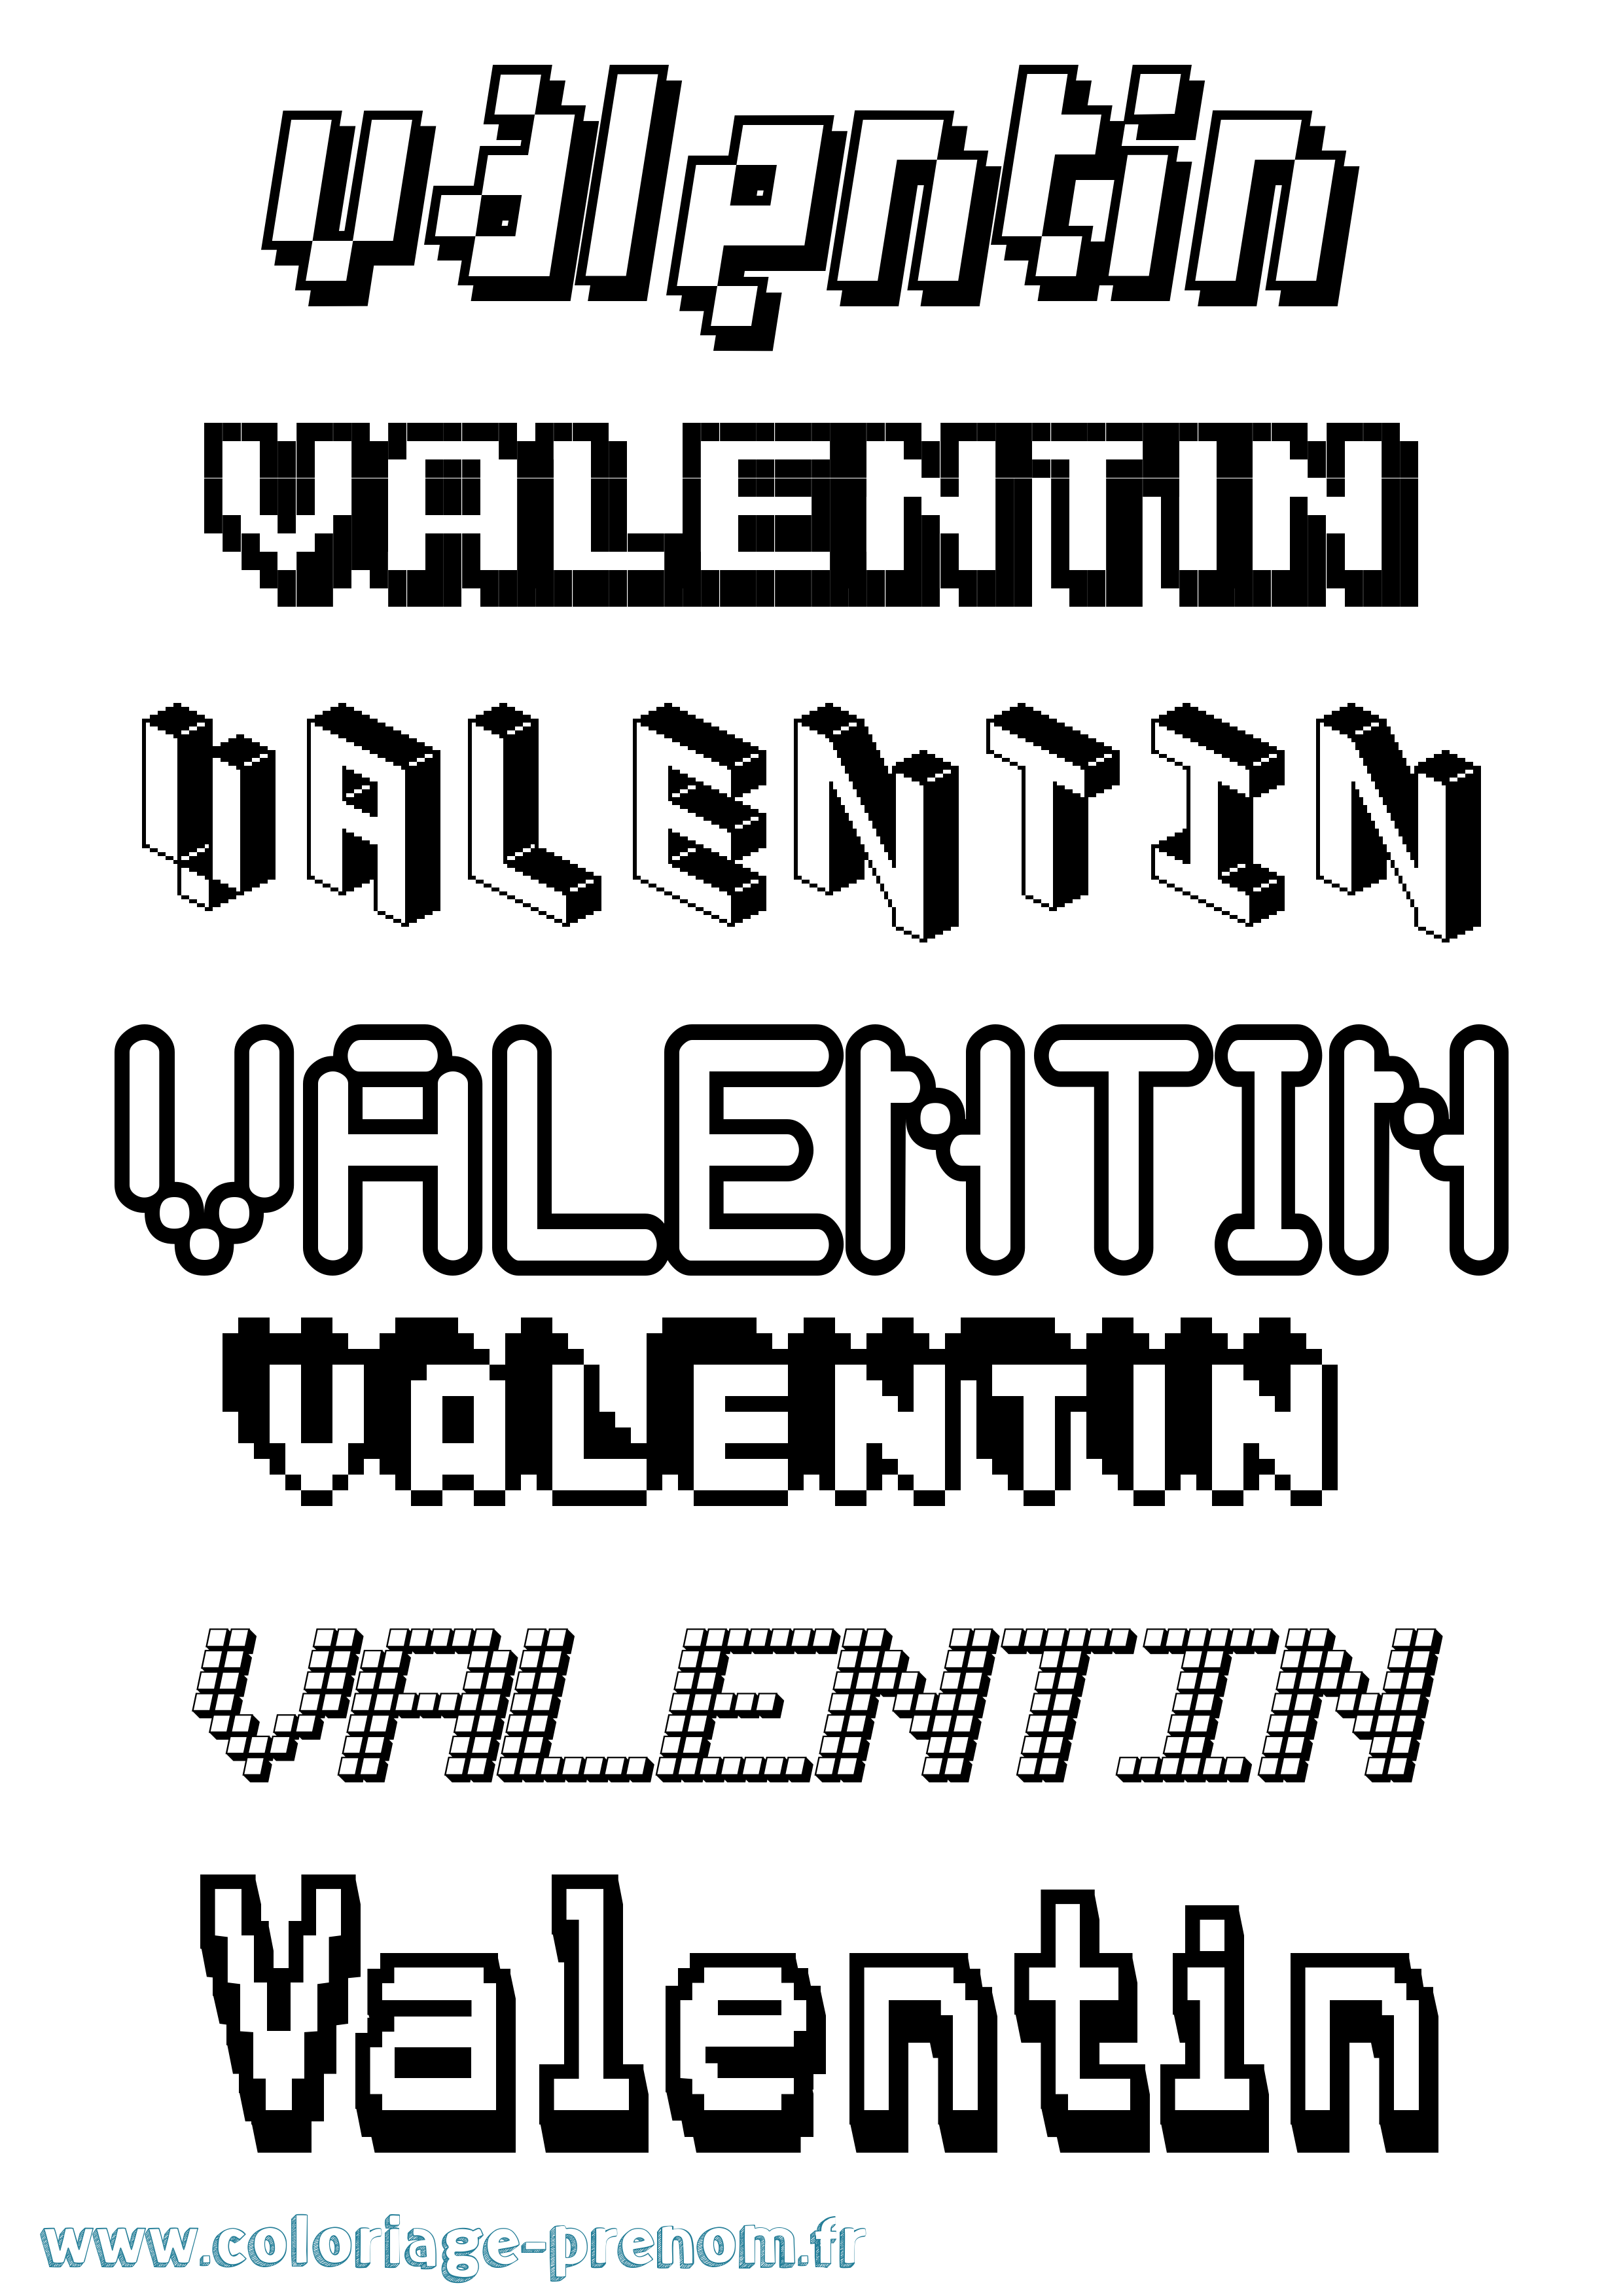 Coloriage prénom Valentin Pixel